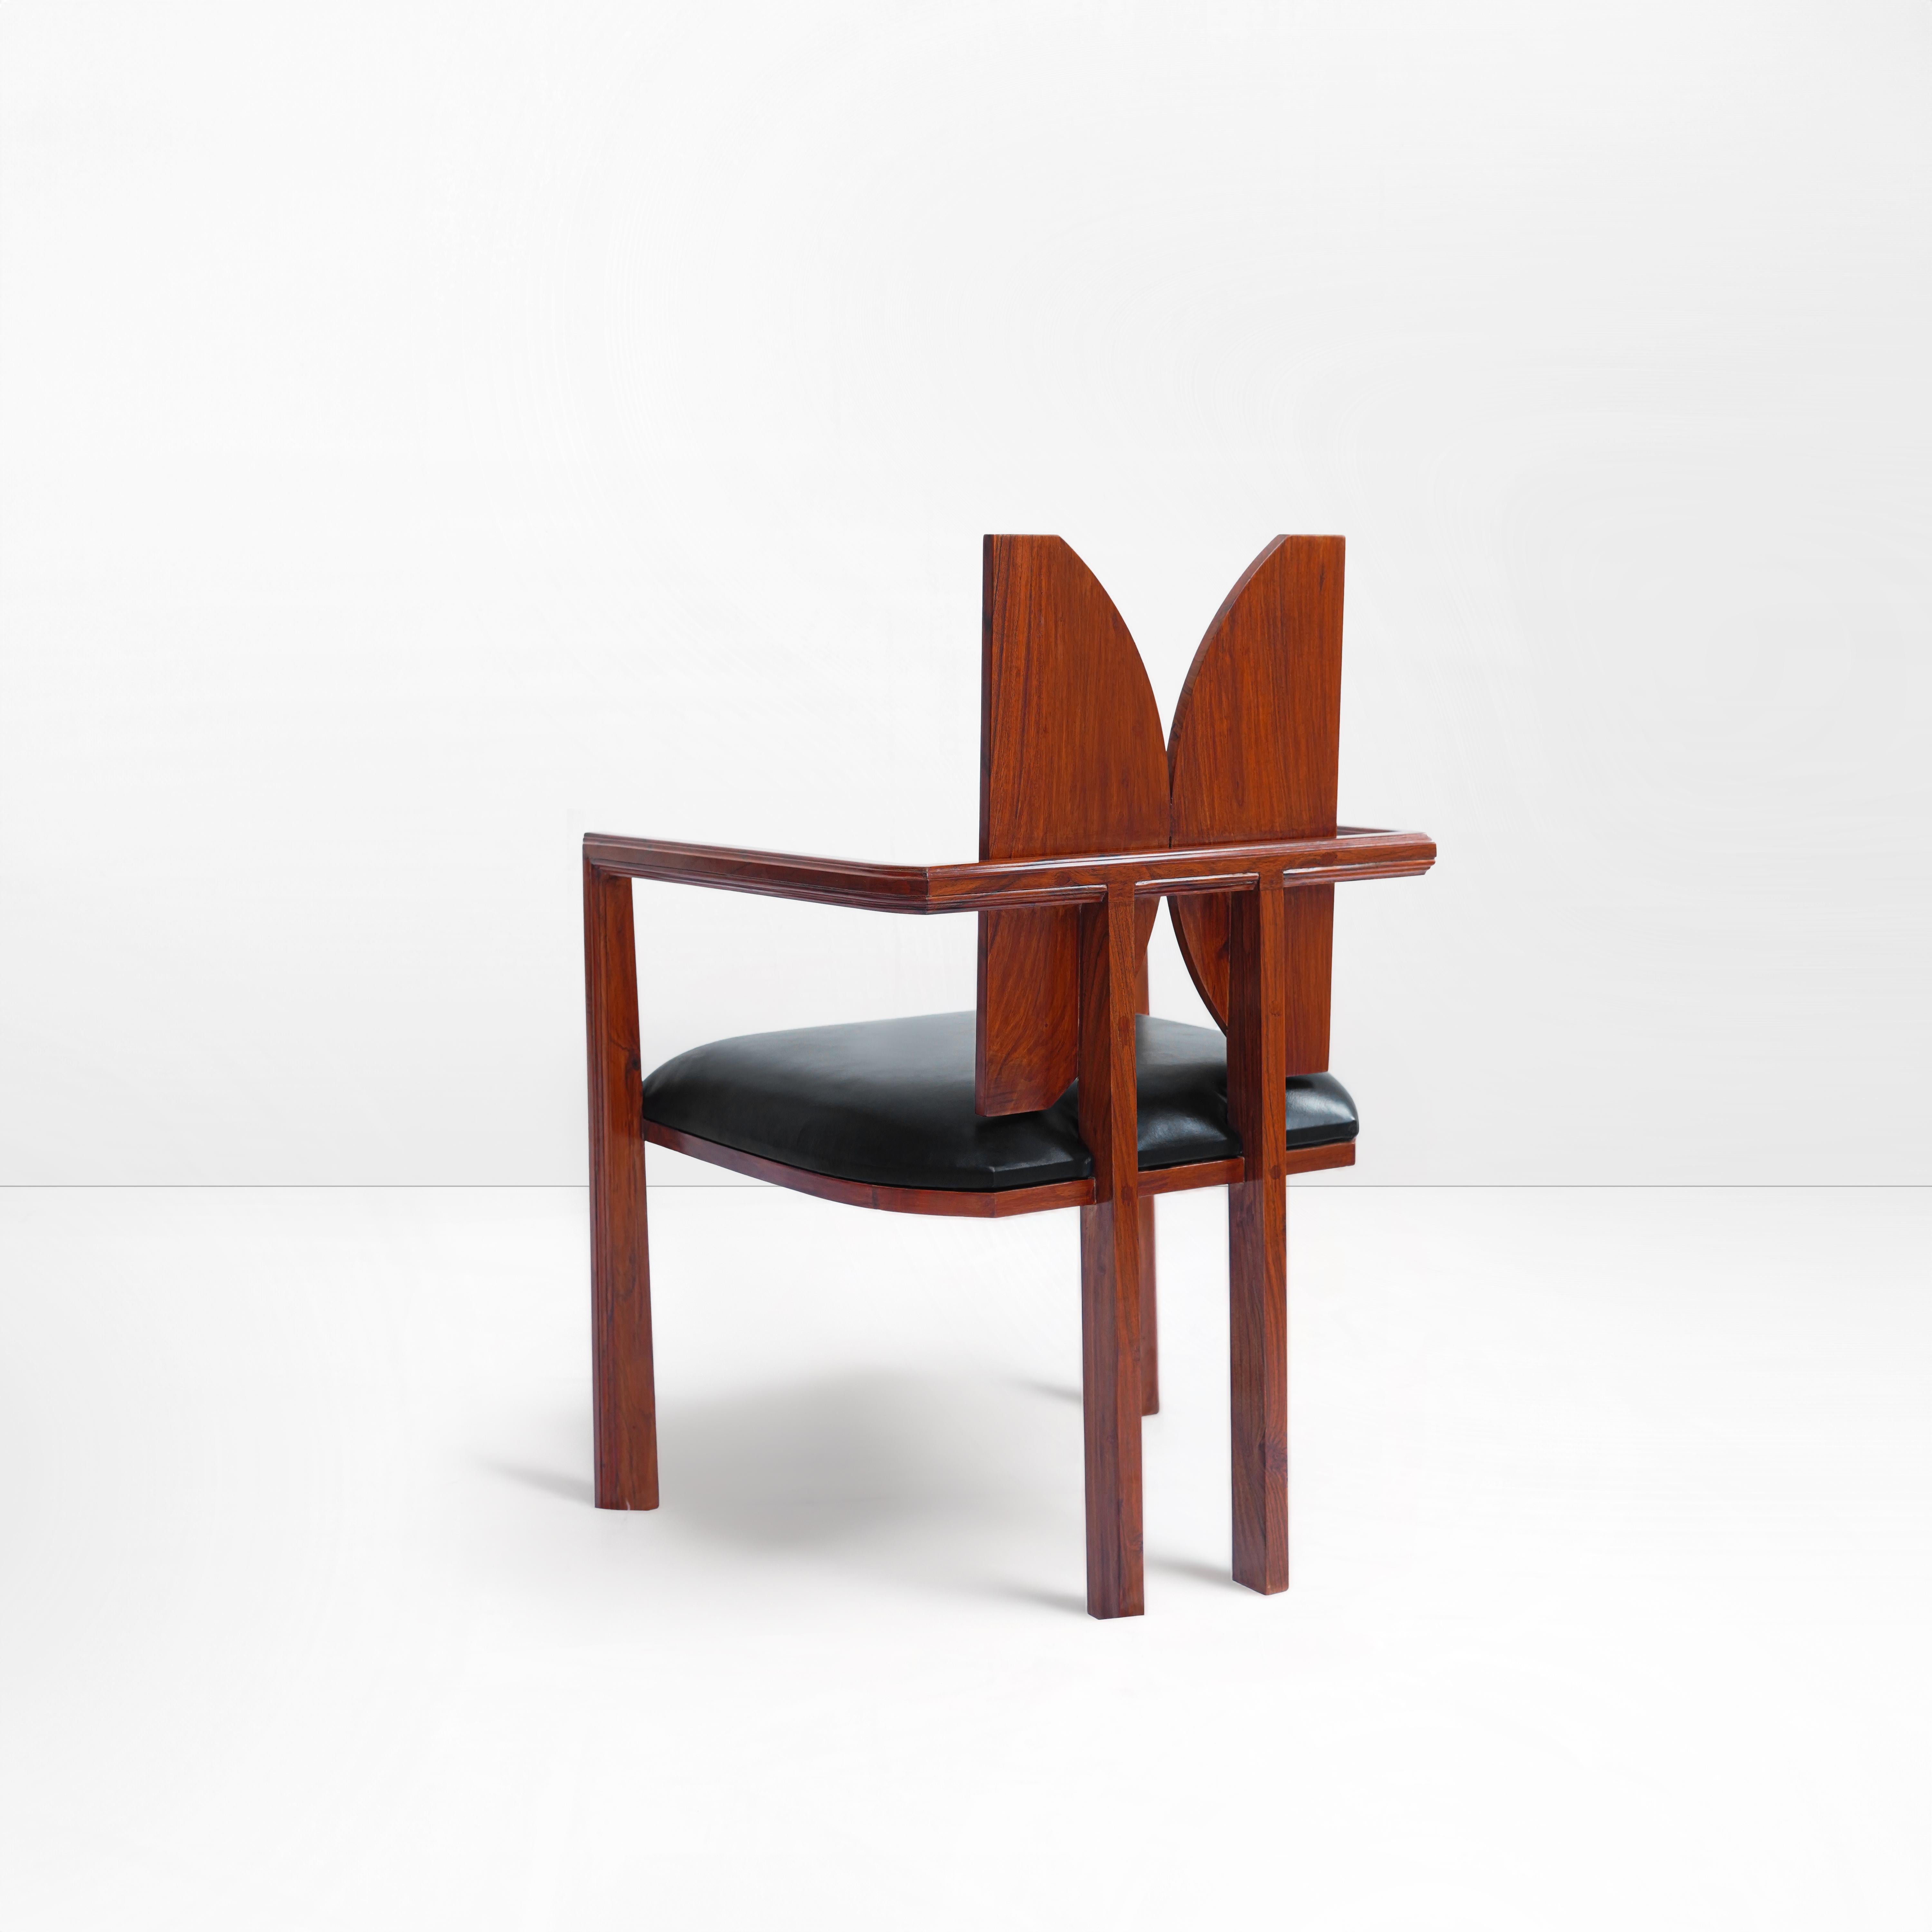 Brass original, Geometric, transitional style, art nouveau, bold, modern dining chair For Sale